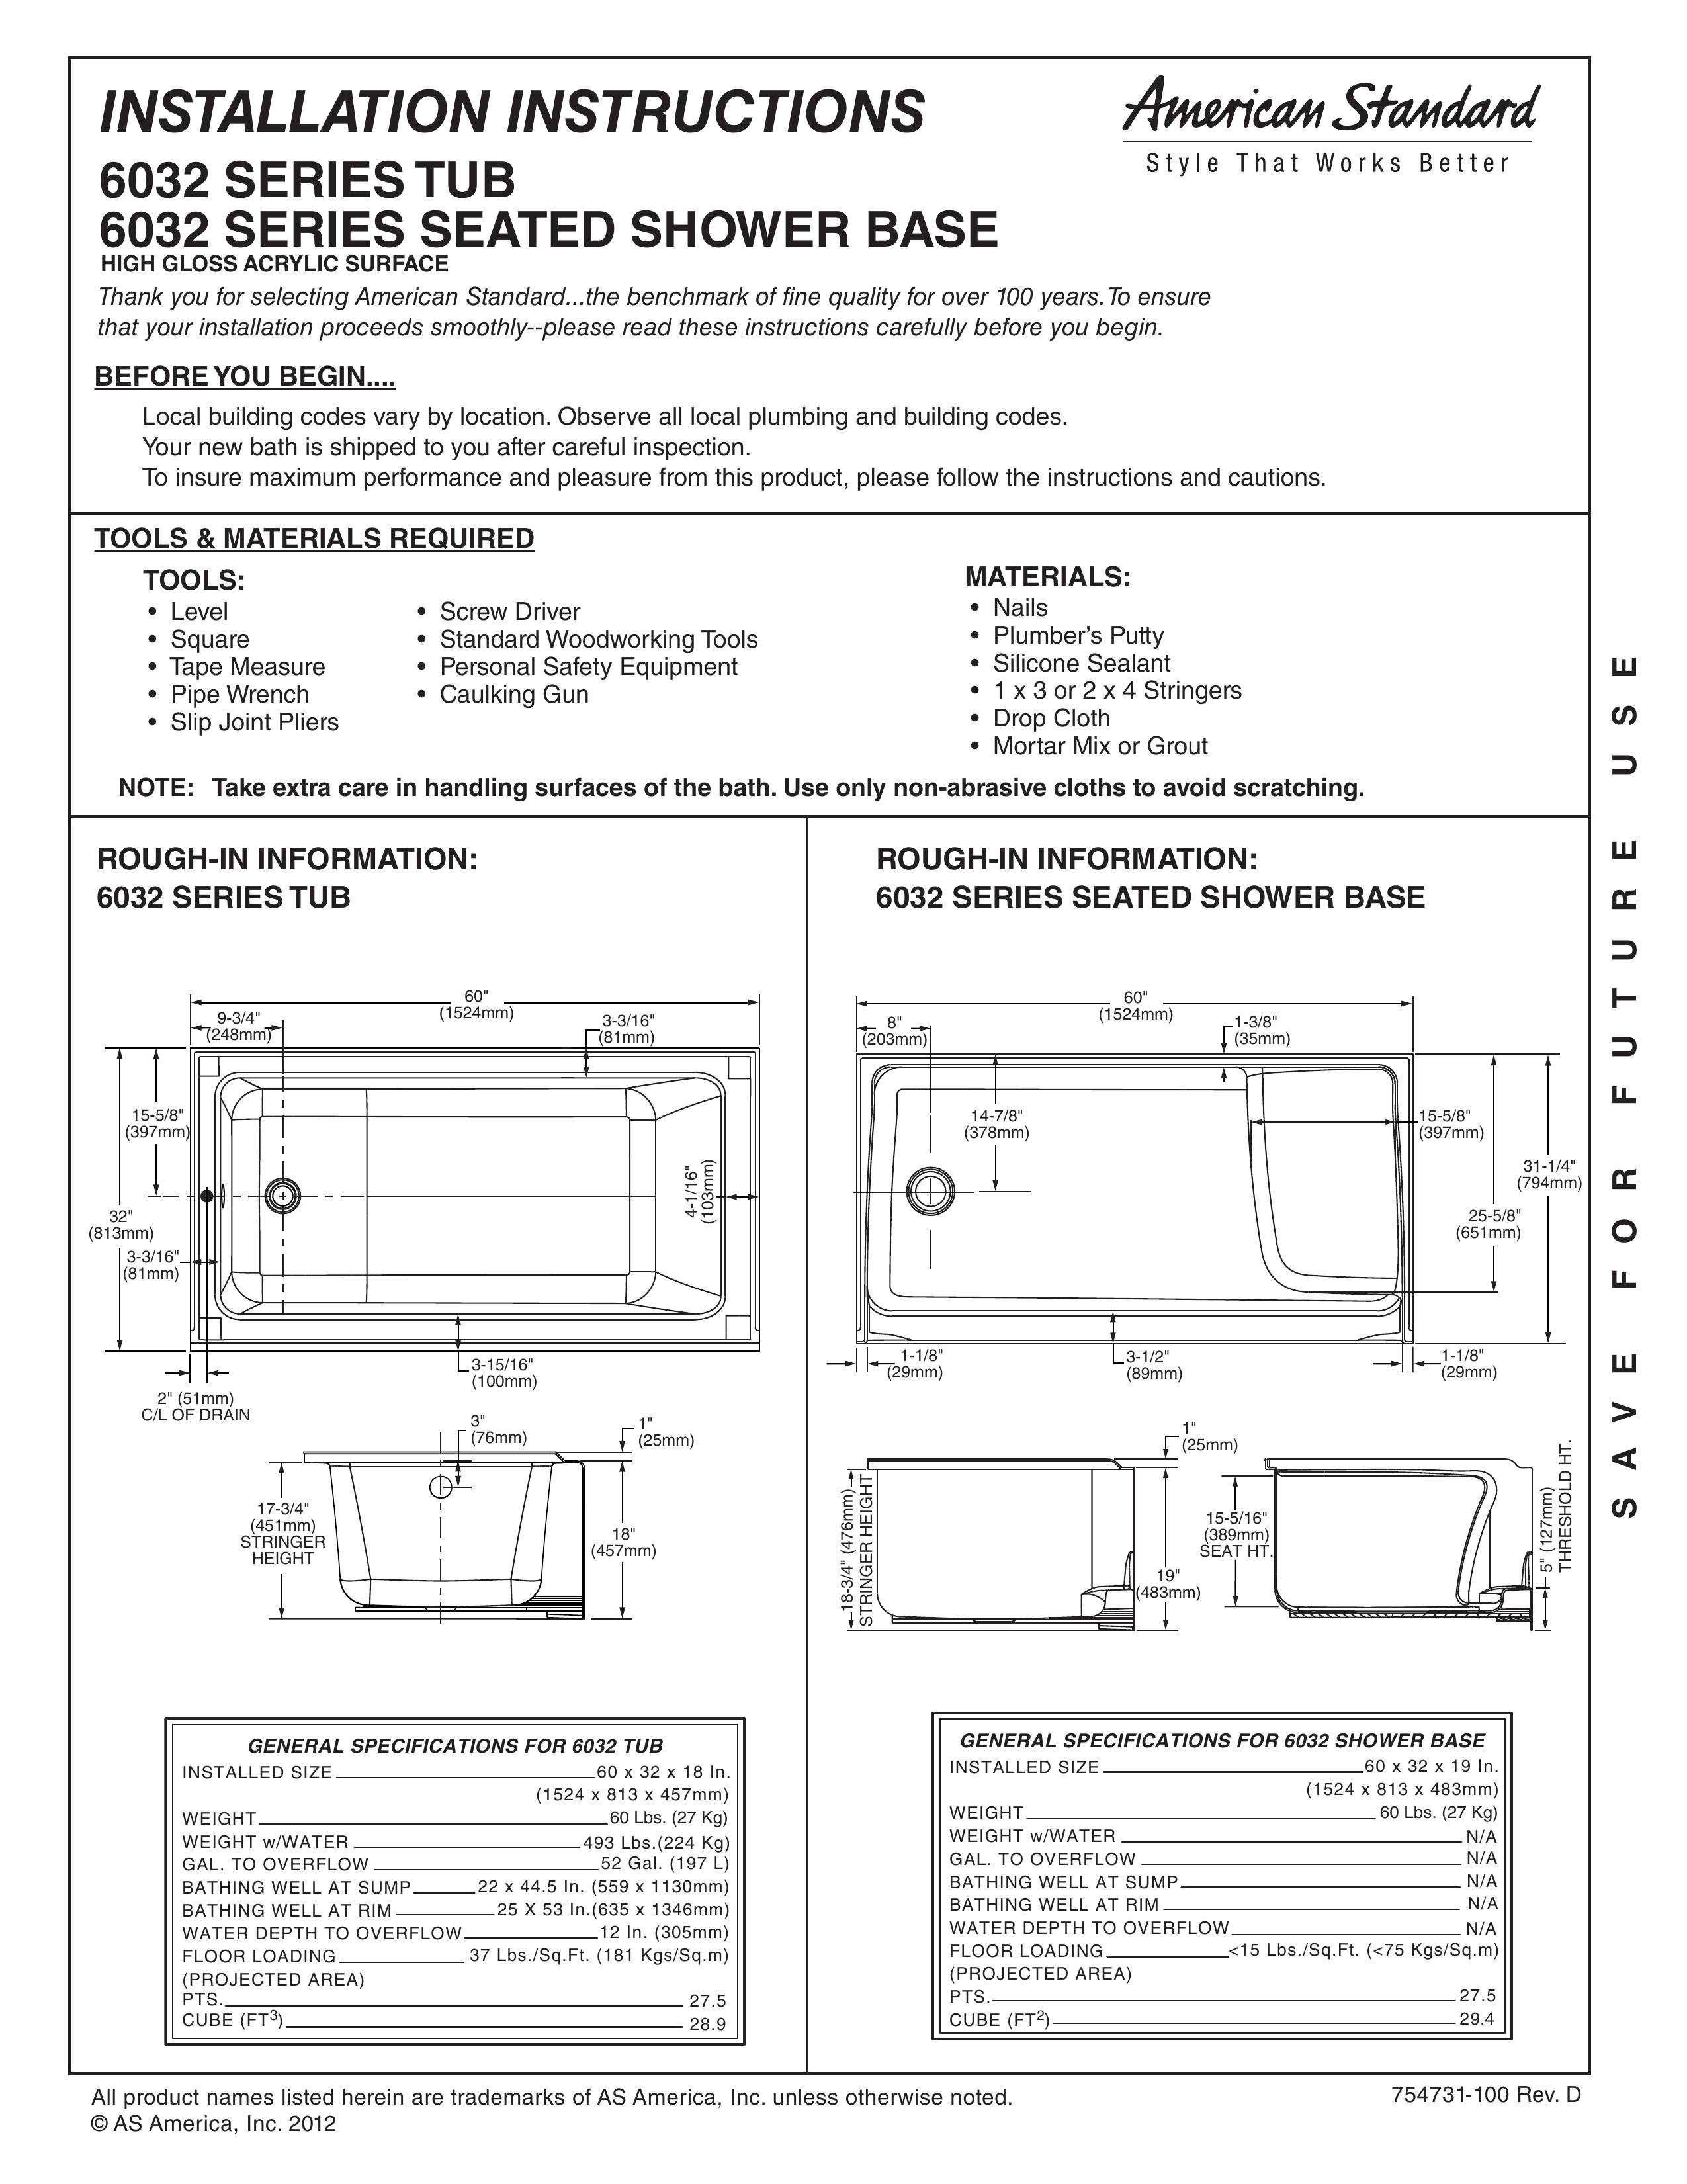 American Standard 6032 Series TUB Bathroom Aids User Manual (Page 1)